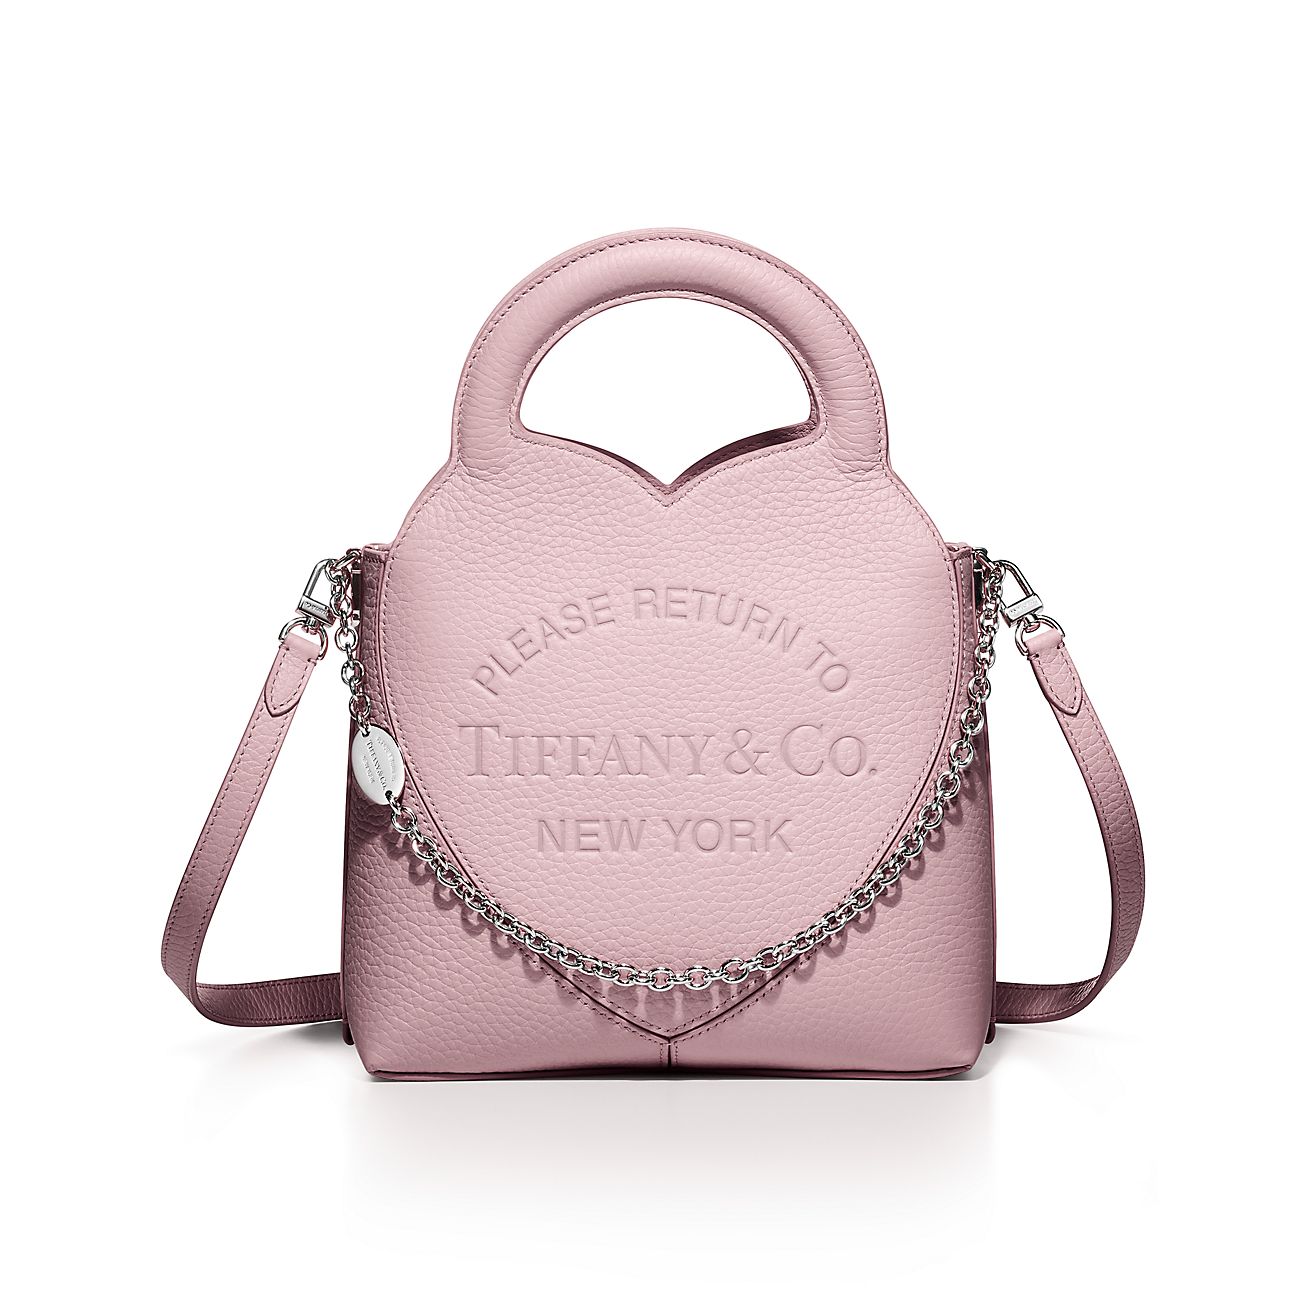 Ballet Pink Box Leather Shoulder Bag with Pearl Strap